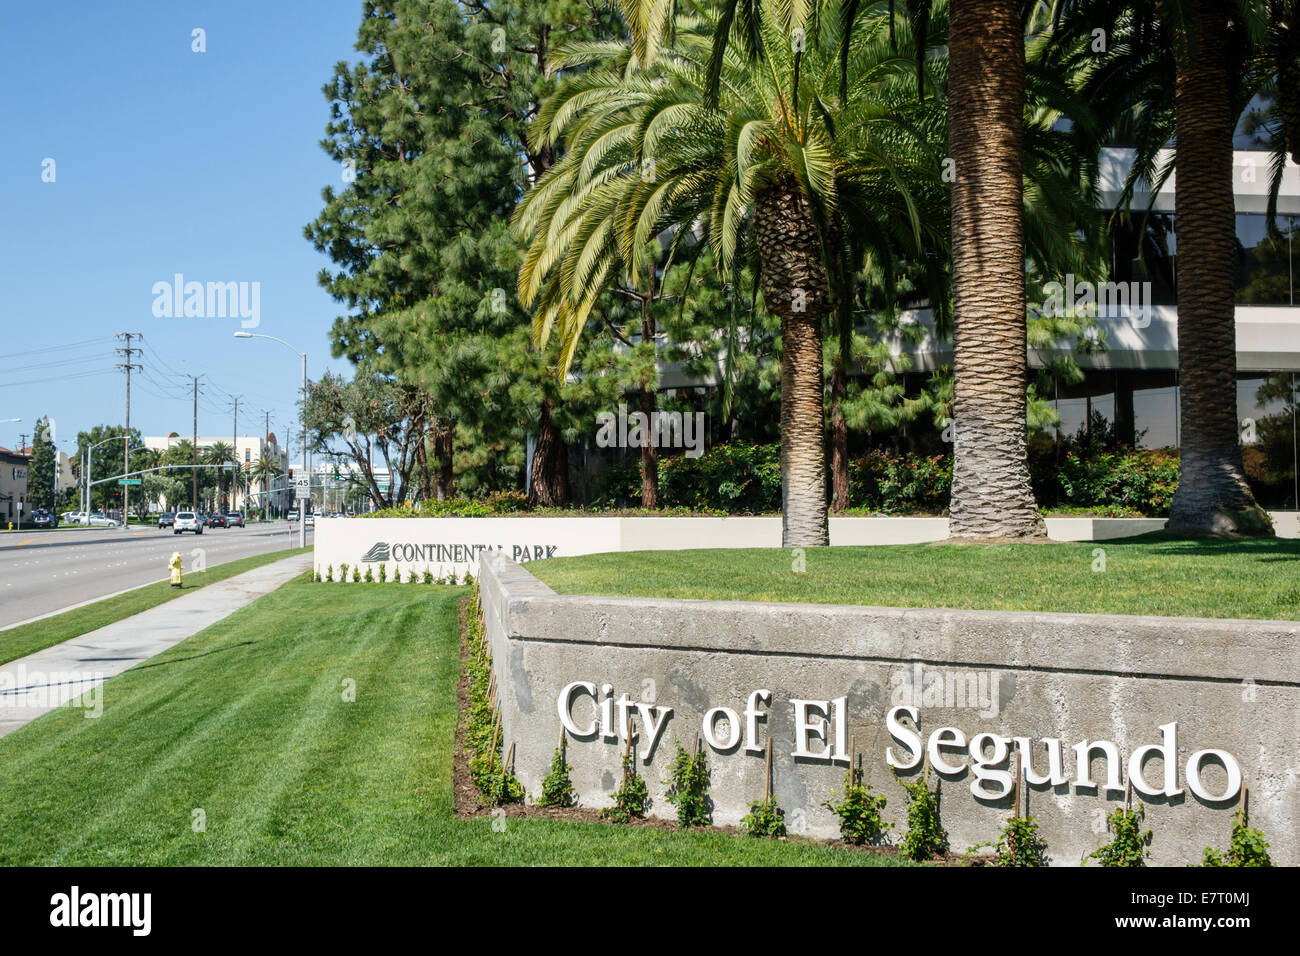 Los Angeles California,LA,El Segundo,Rosecrans Ave,sign,palm,wall,landscaping,sidewalk,street,Continental Park,industrial park,lawn,CA140403002 Stock Photo